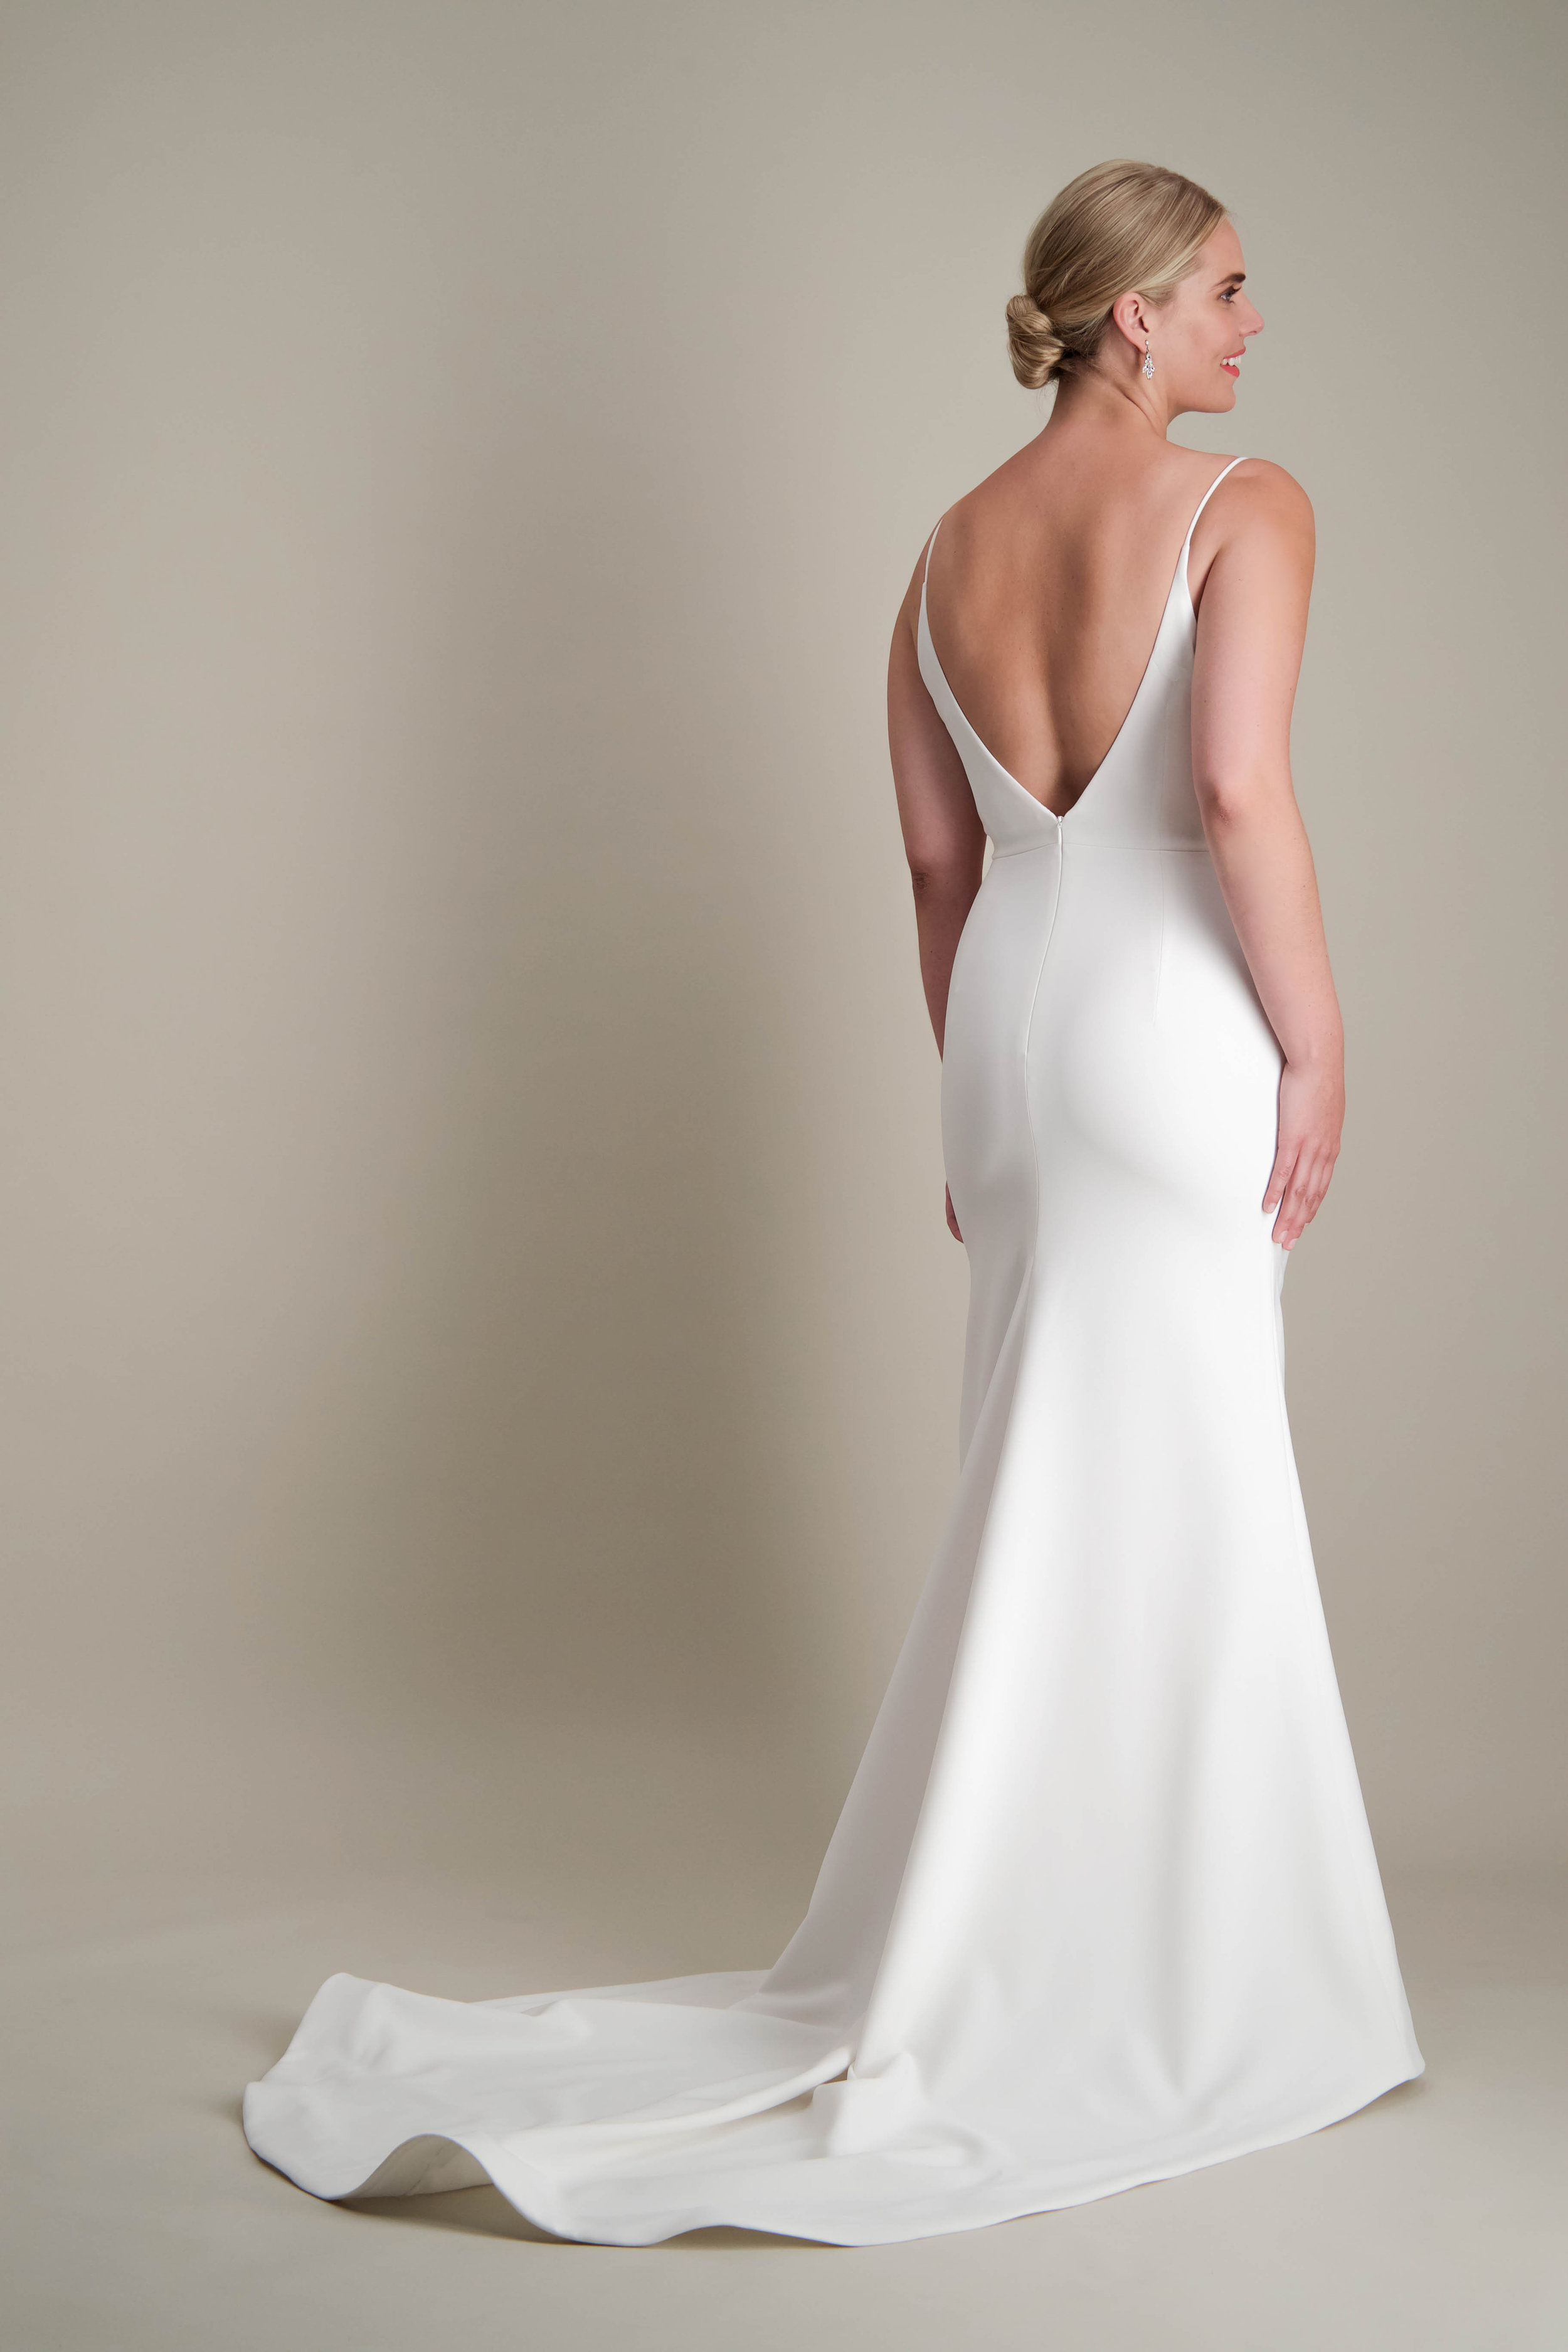 Islet gown fitted modern sleek wedding dress 5.jpg